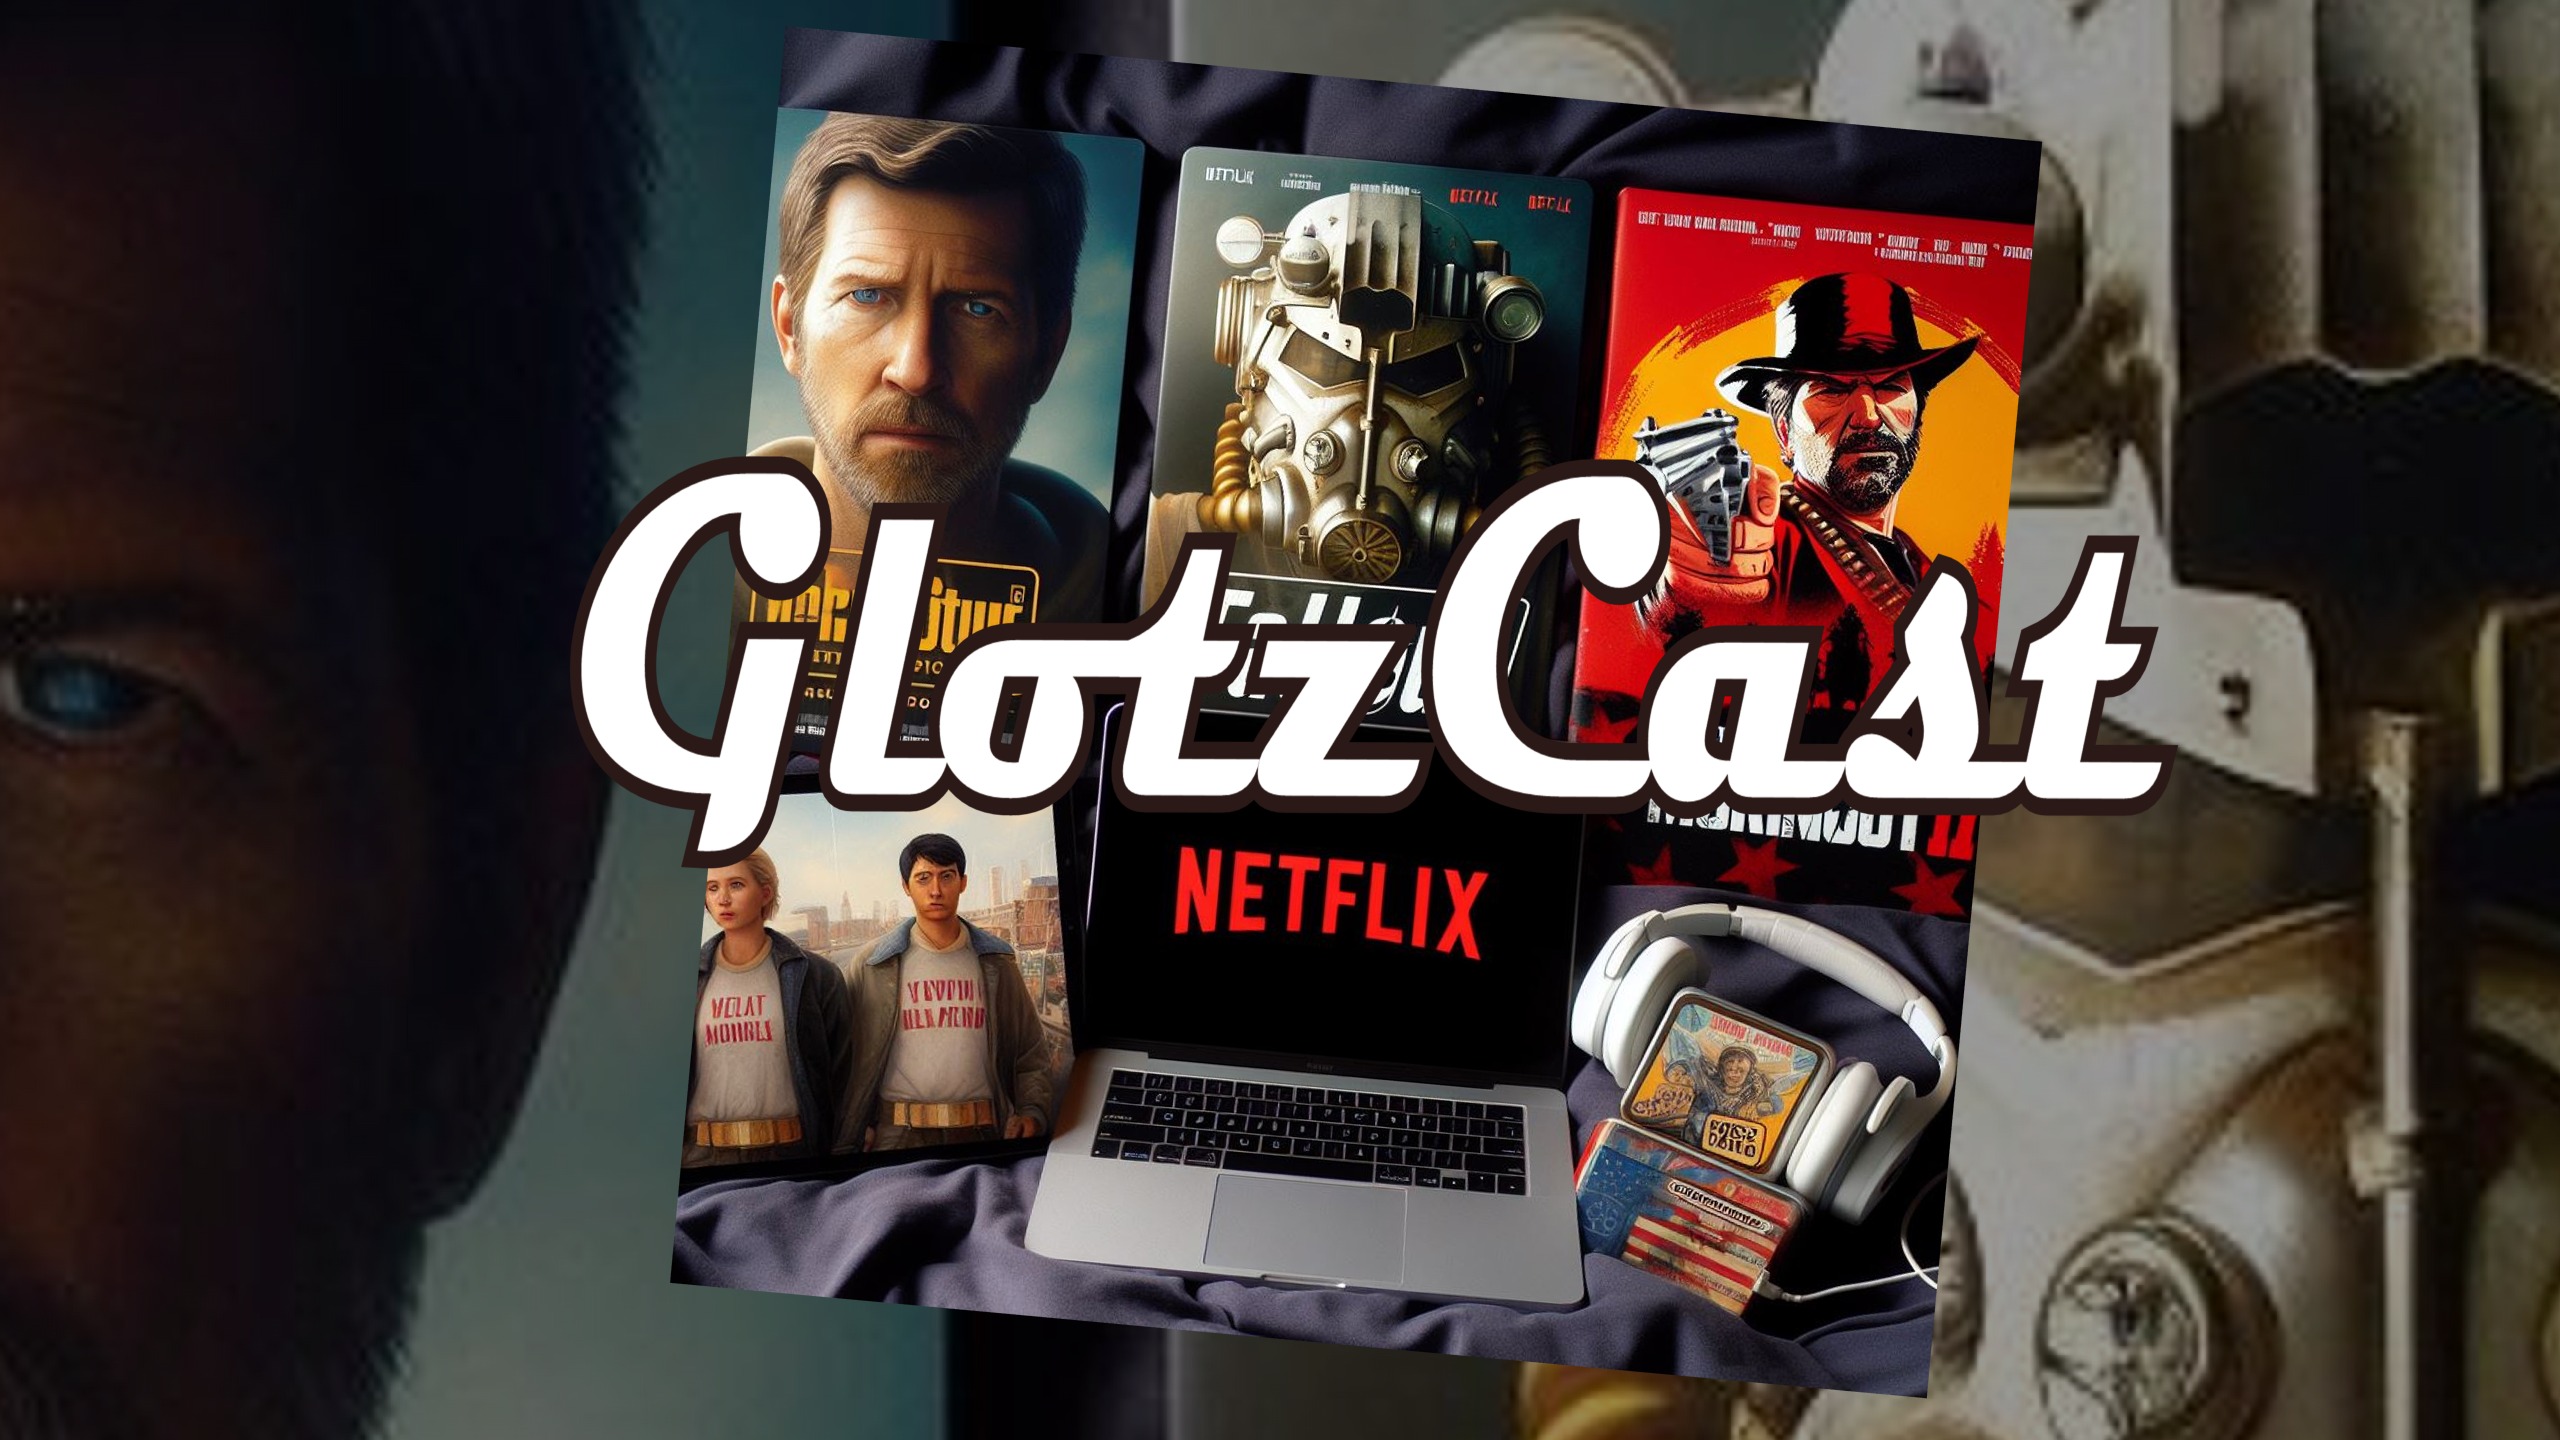 Fallout! Netflix gewinnt den Streaming-Krieg: Scary Movie(s) mit Wes Anderson (GlotzCast #146)